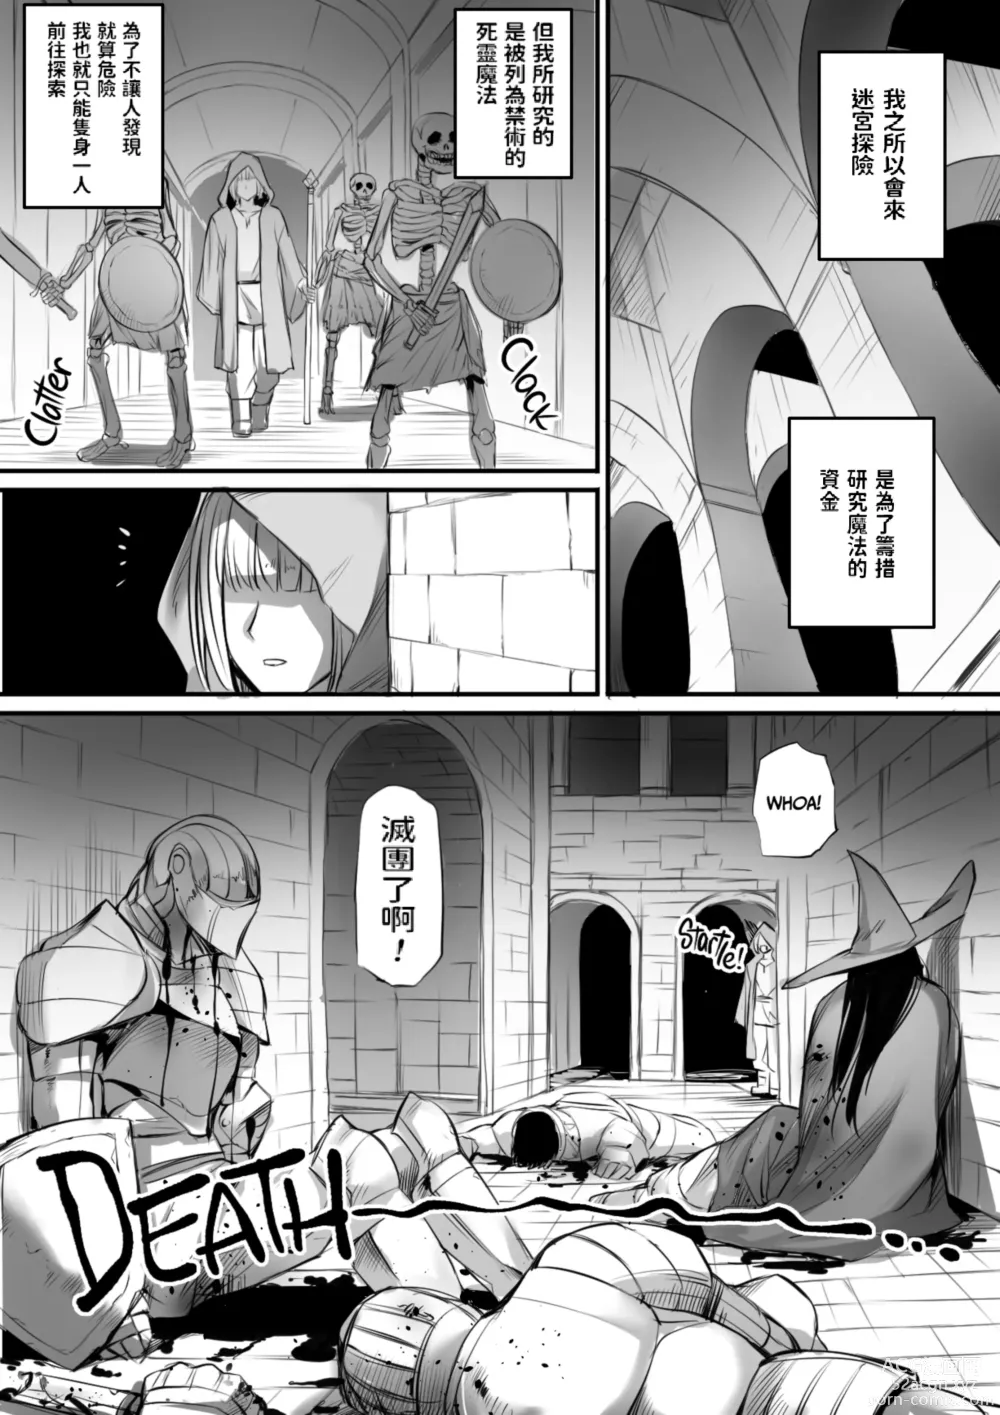 Page 2 of doujinshi 迷宮で格闘娘の死体を拾ってキョンシーにしてみた 1-3